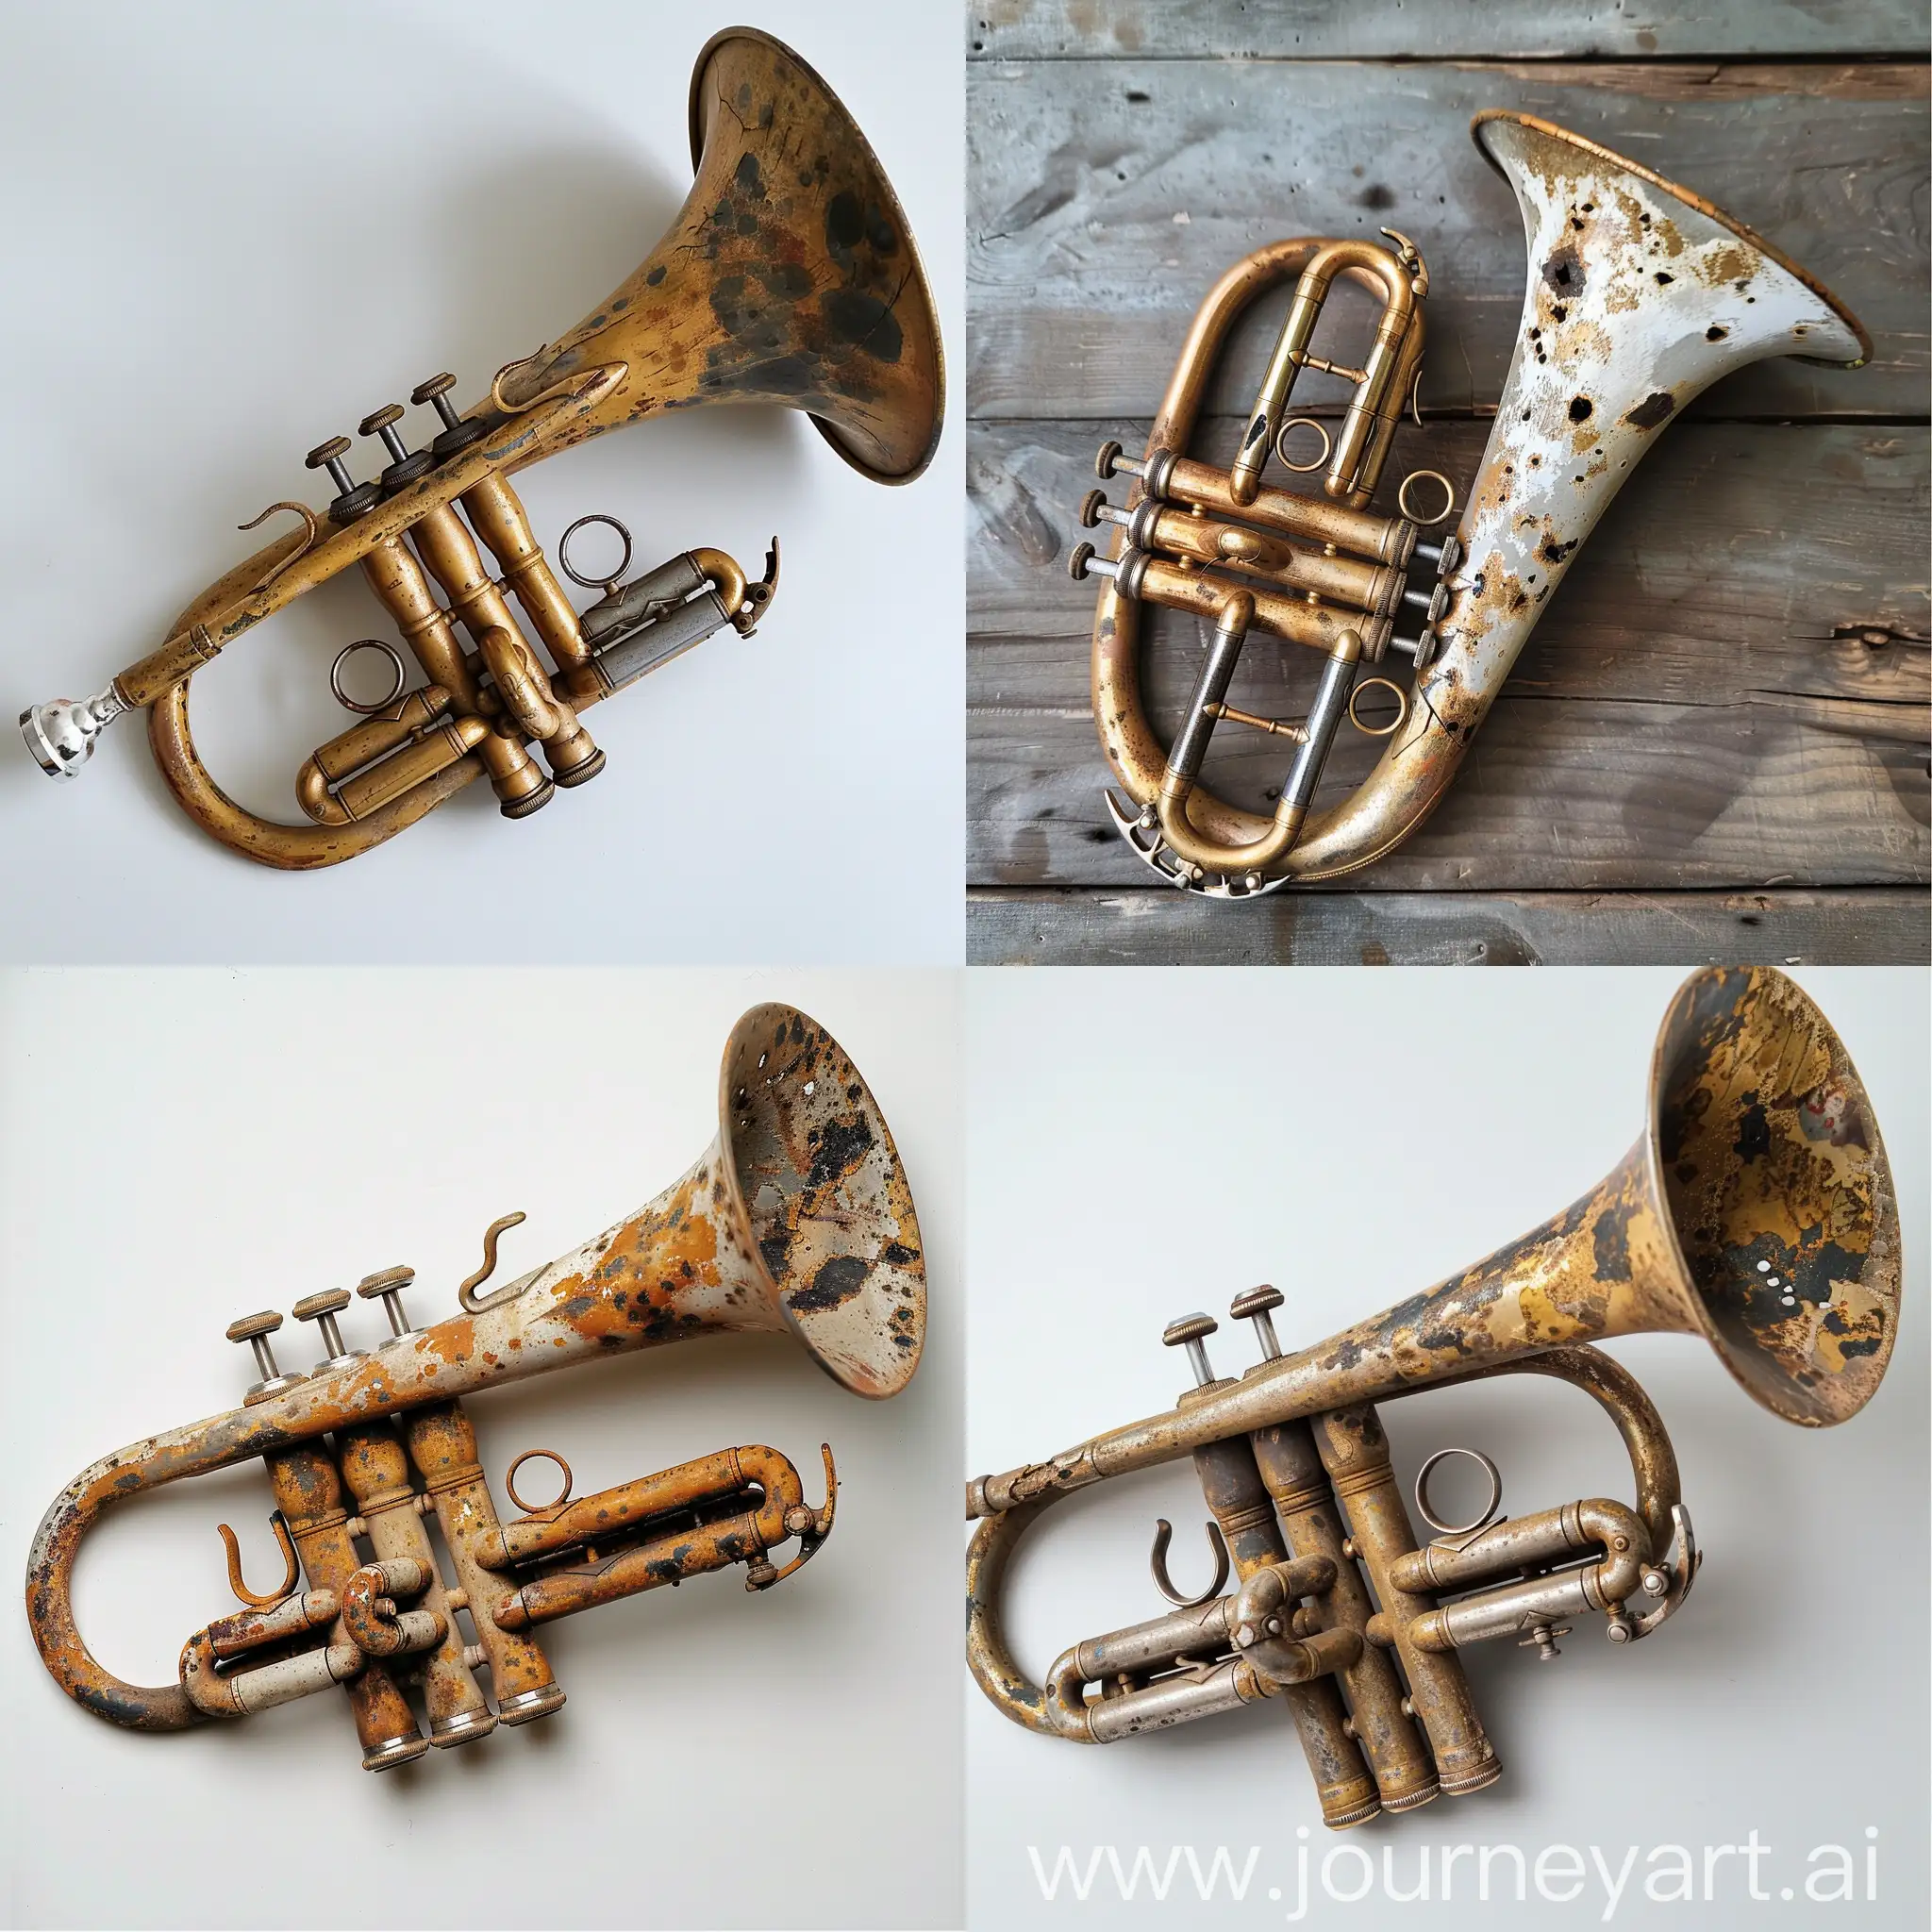 Charming-Broken-Trumpet-with-Personality-A-Unique-Artistic-Representation